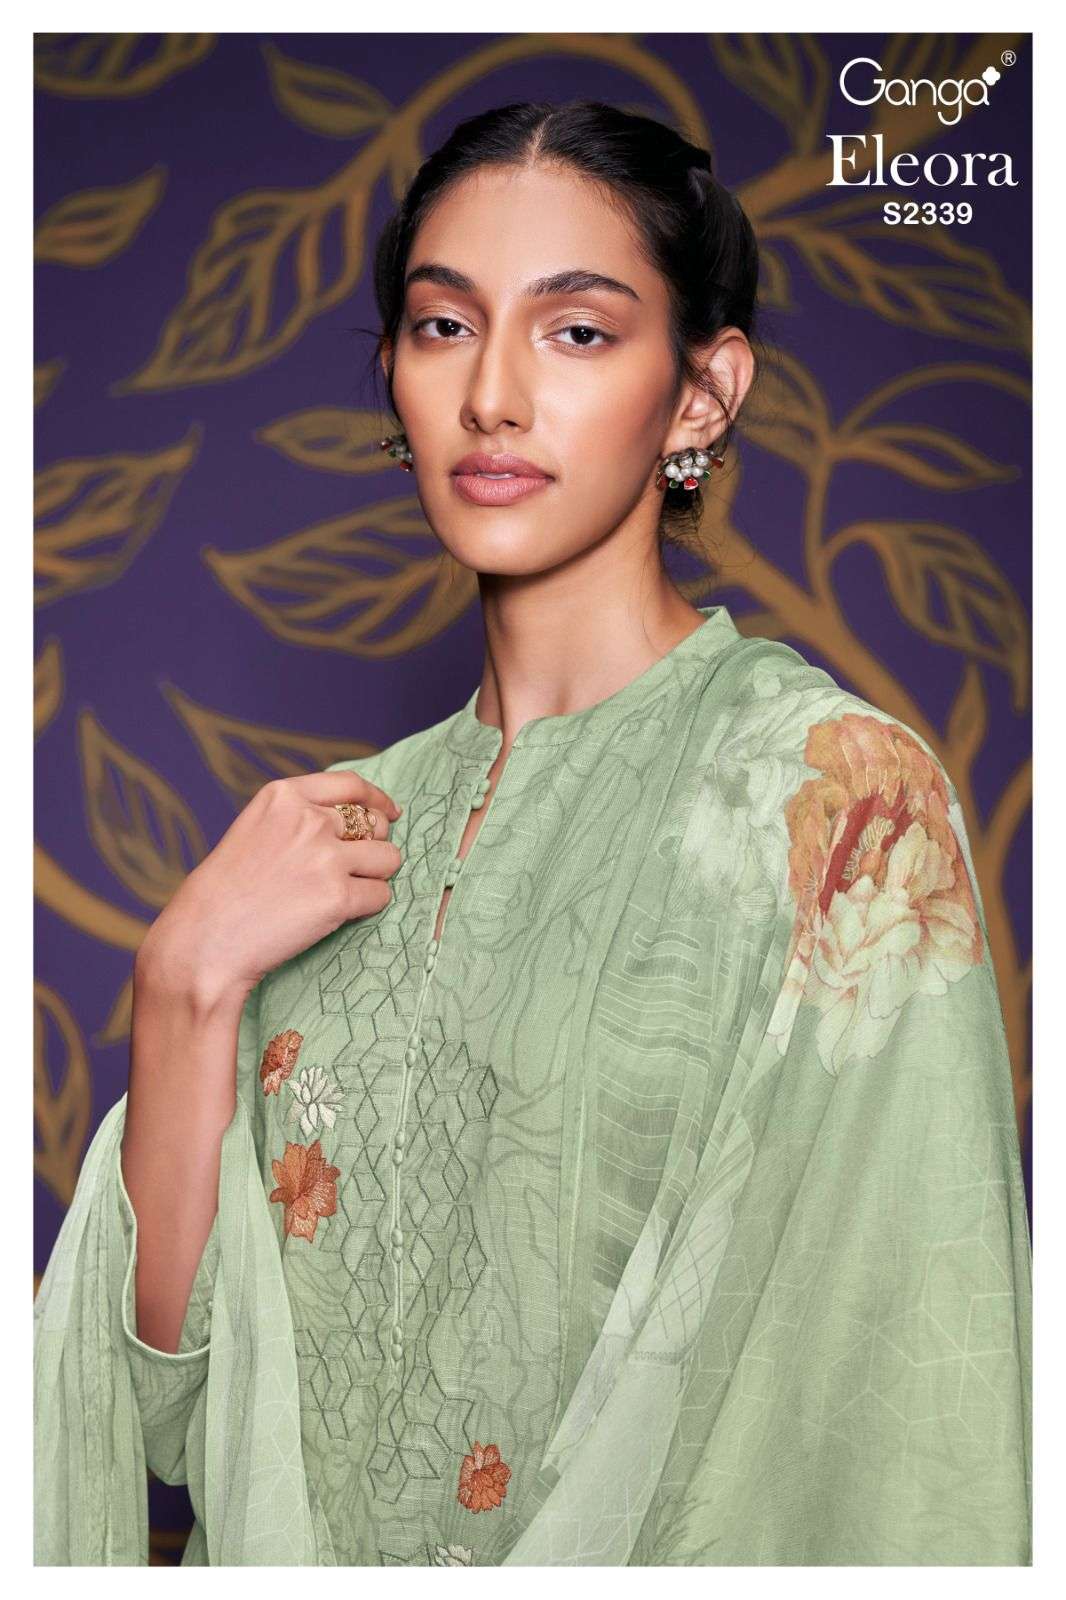 Ganga Eleora 2339 Exclusive Linen Cotton Suit Catalog Suppliers